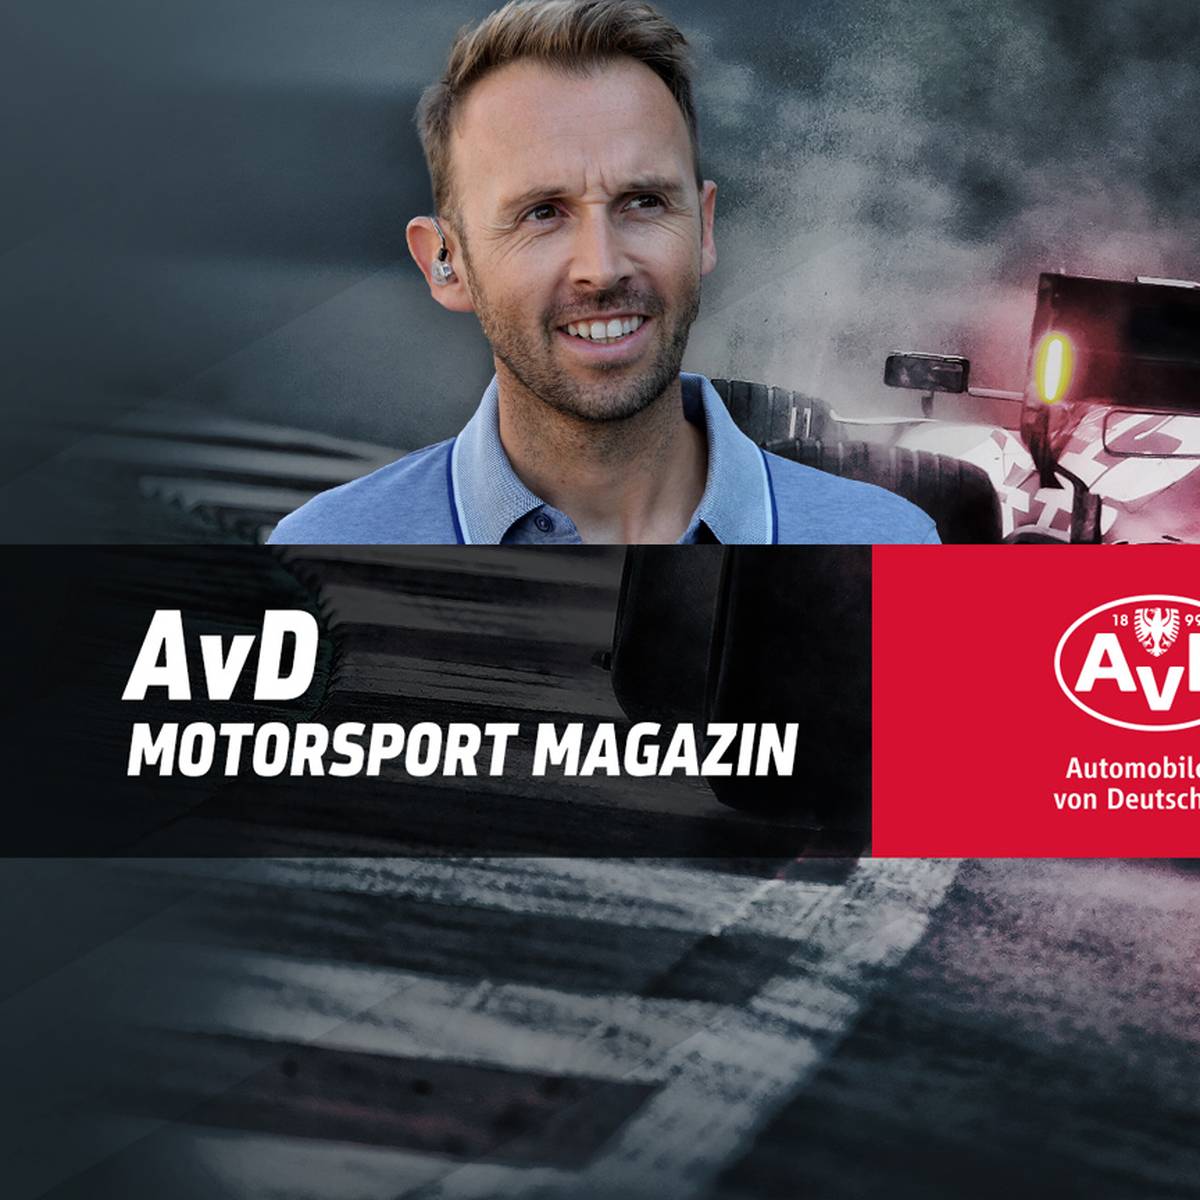 Das AvD Motor & Sport Magazin vom 10.10.2021 mit Maximilian Götz und René Rast